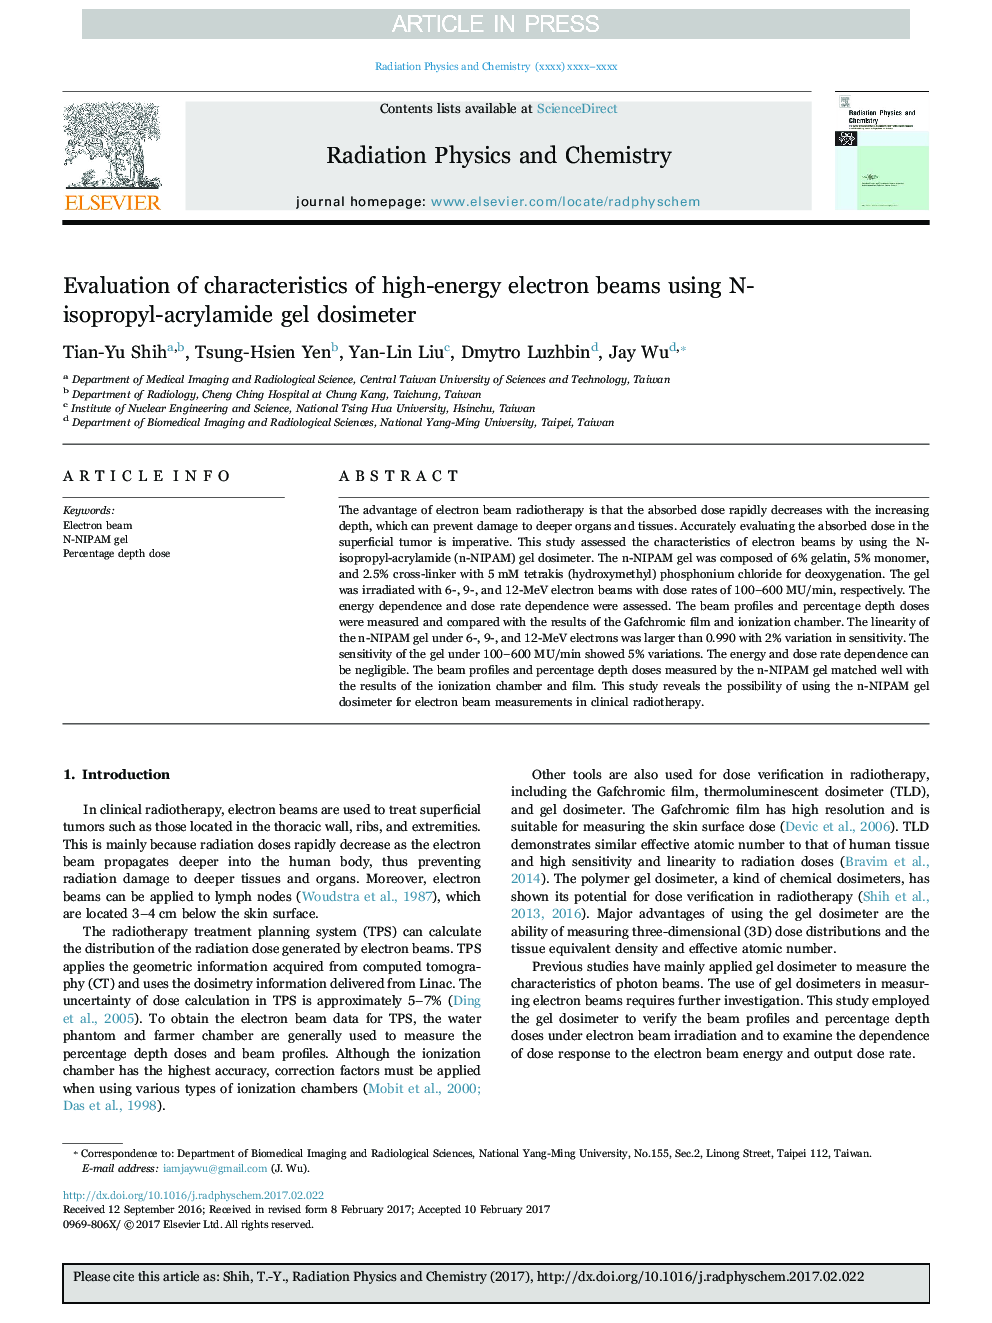 Evaluation of characteristics of high-energy electron beams using N-isopropyl-acrylamide gel dosimeter